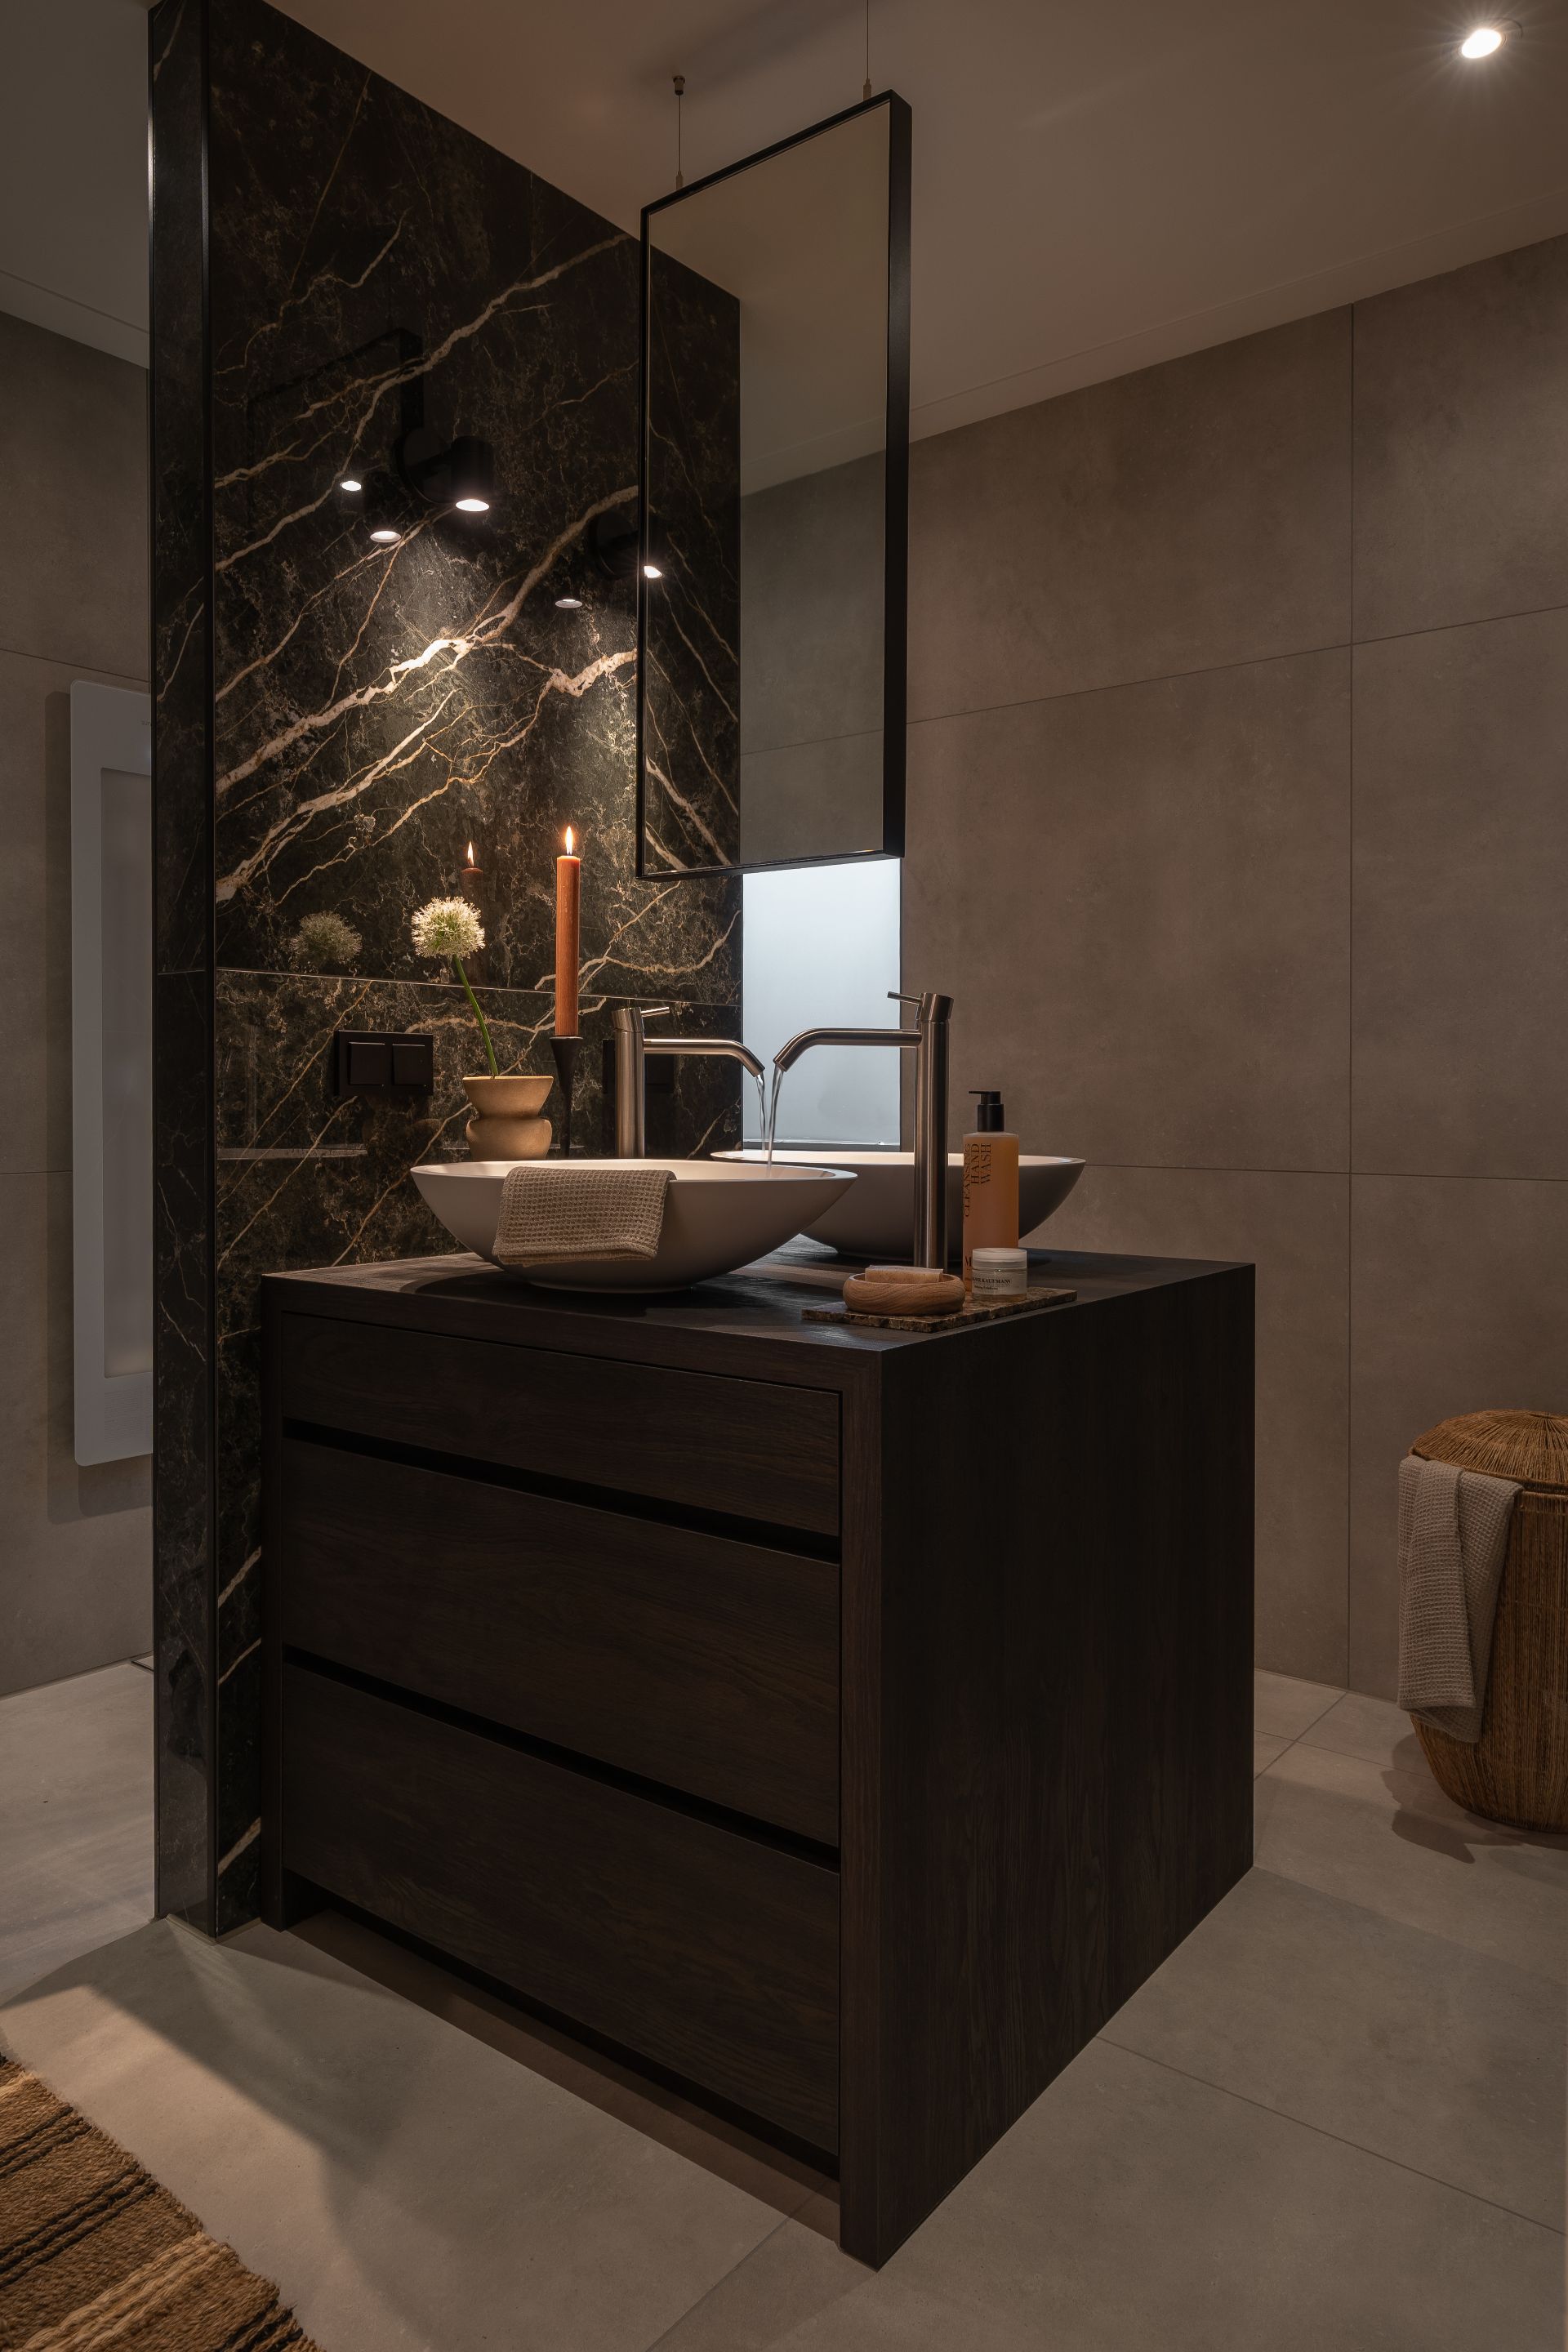 Foto: jaloersmakende  moderne kleine badkamer  eerste kamer badkamers   004